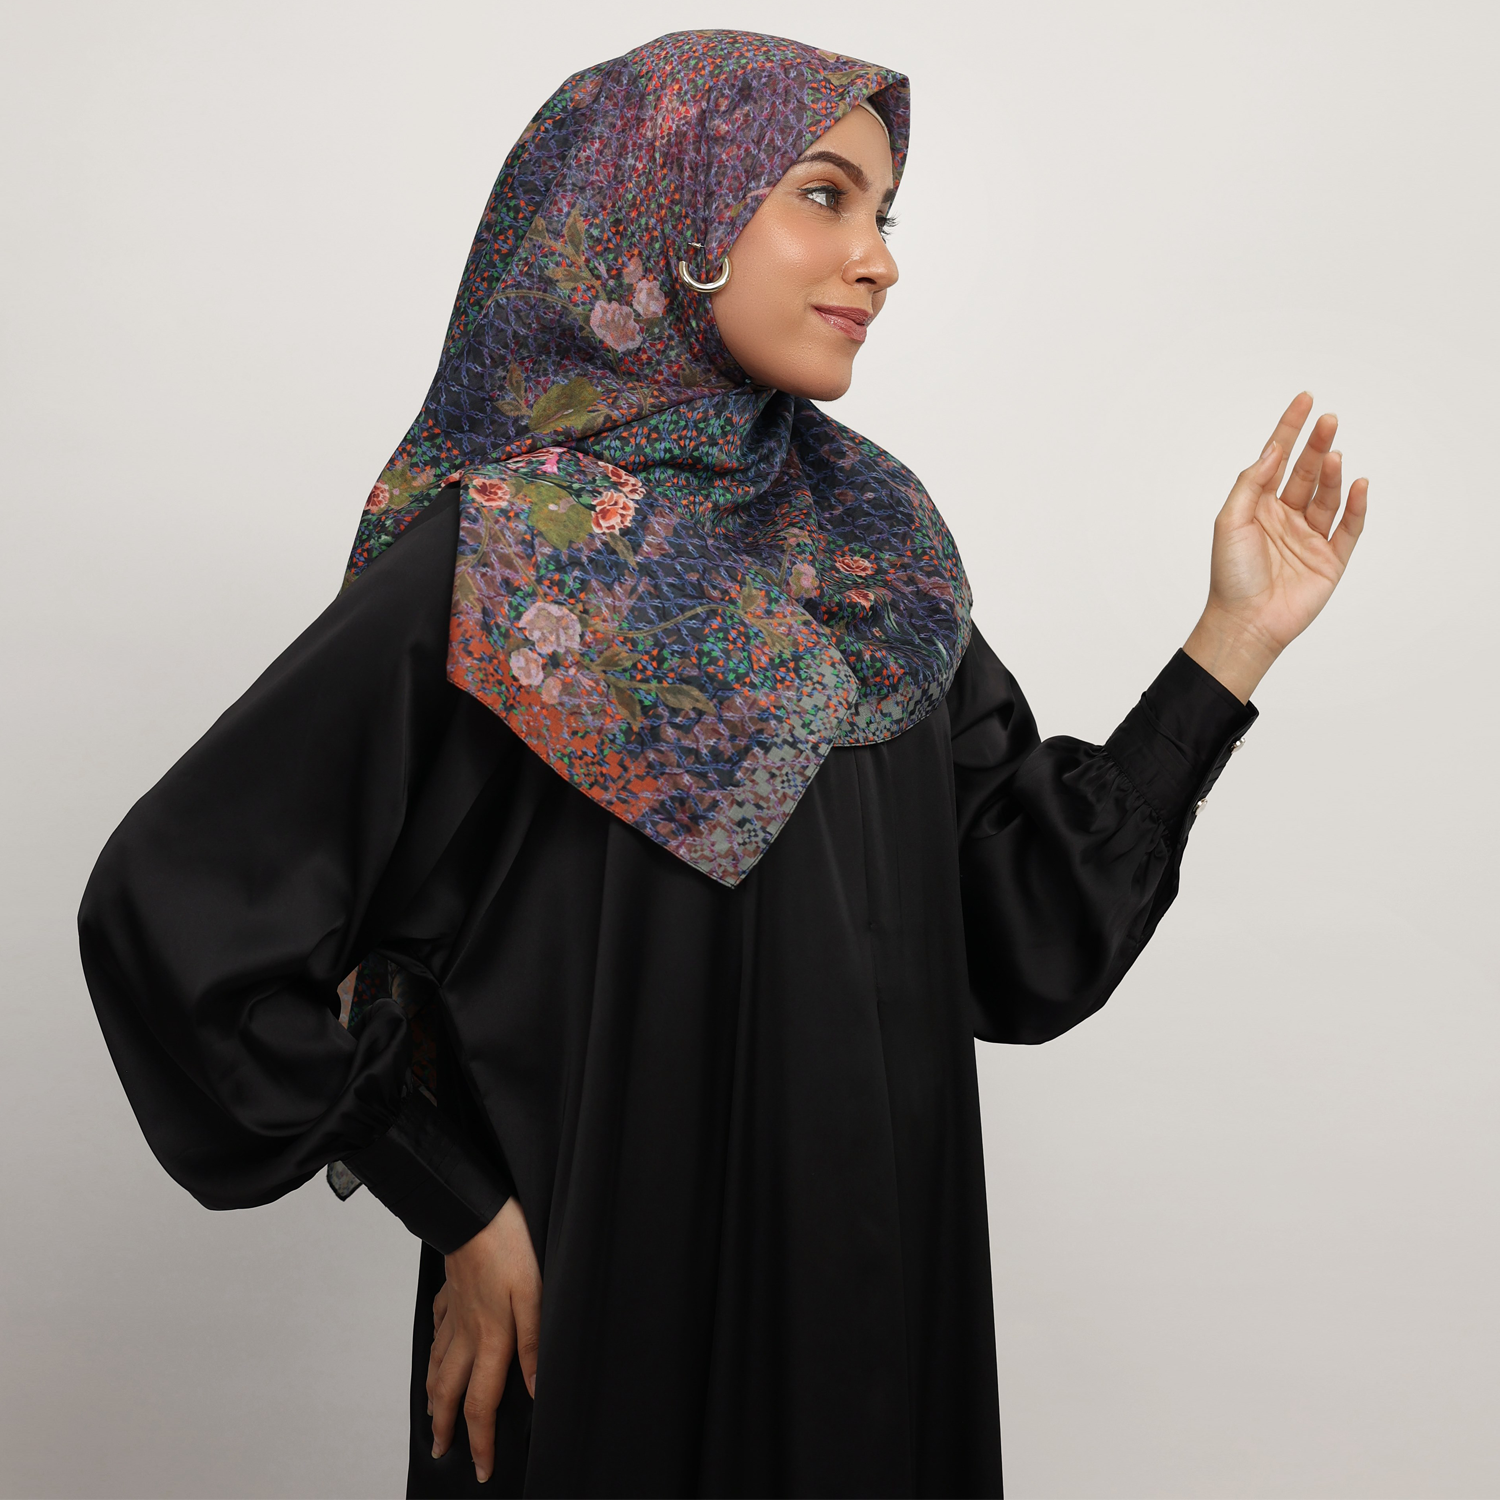 Elzatta Hijab Kanara Patch Mosaic Cordoba - Navy